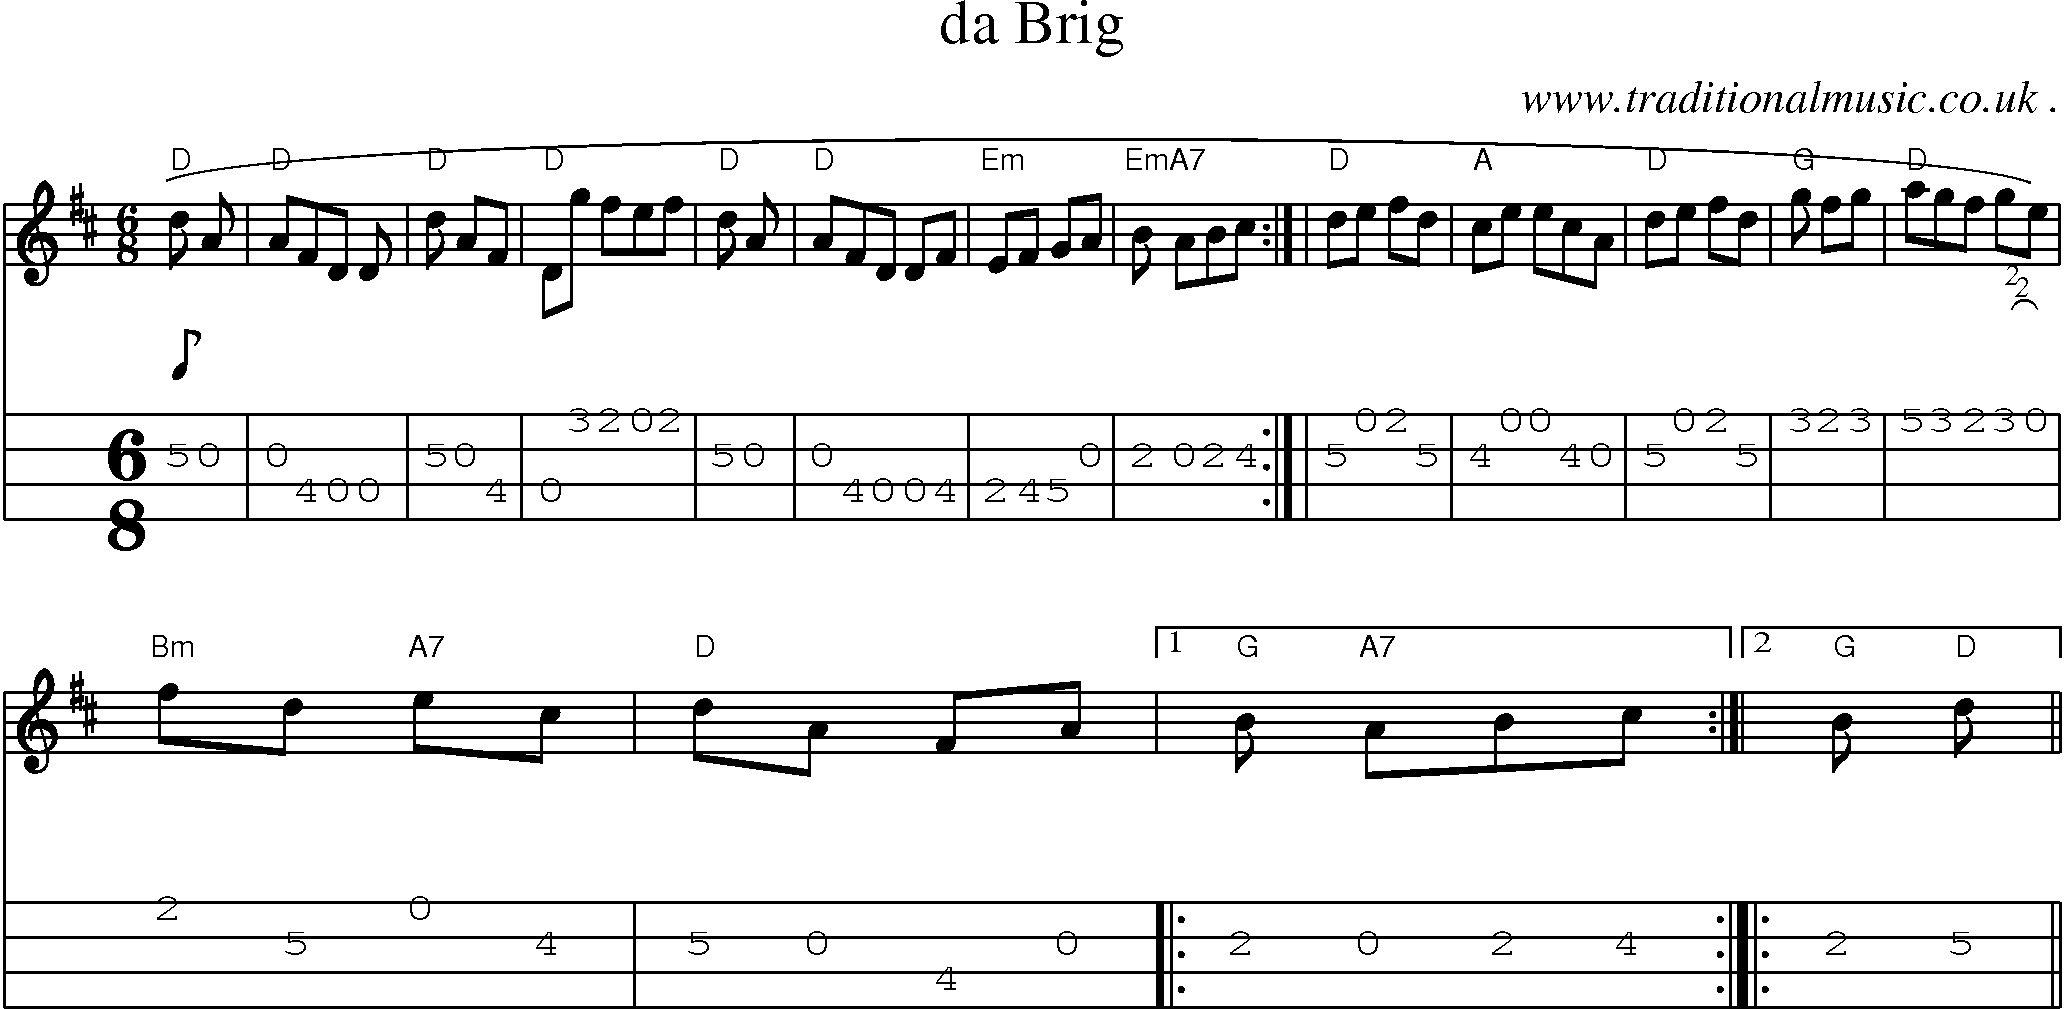 Sheet-music  score, Chords and Mandolin Tabs for Da Brig